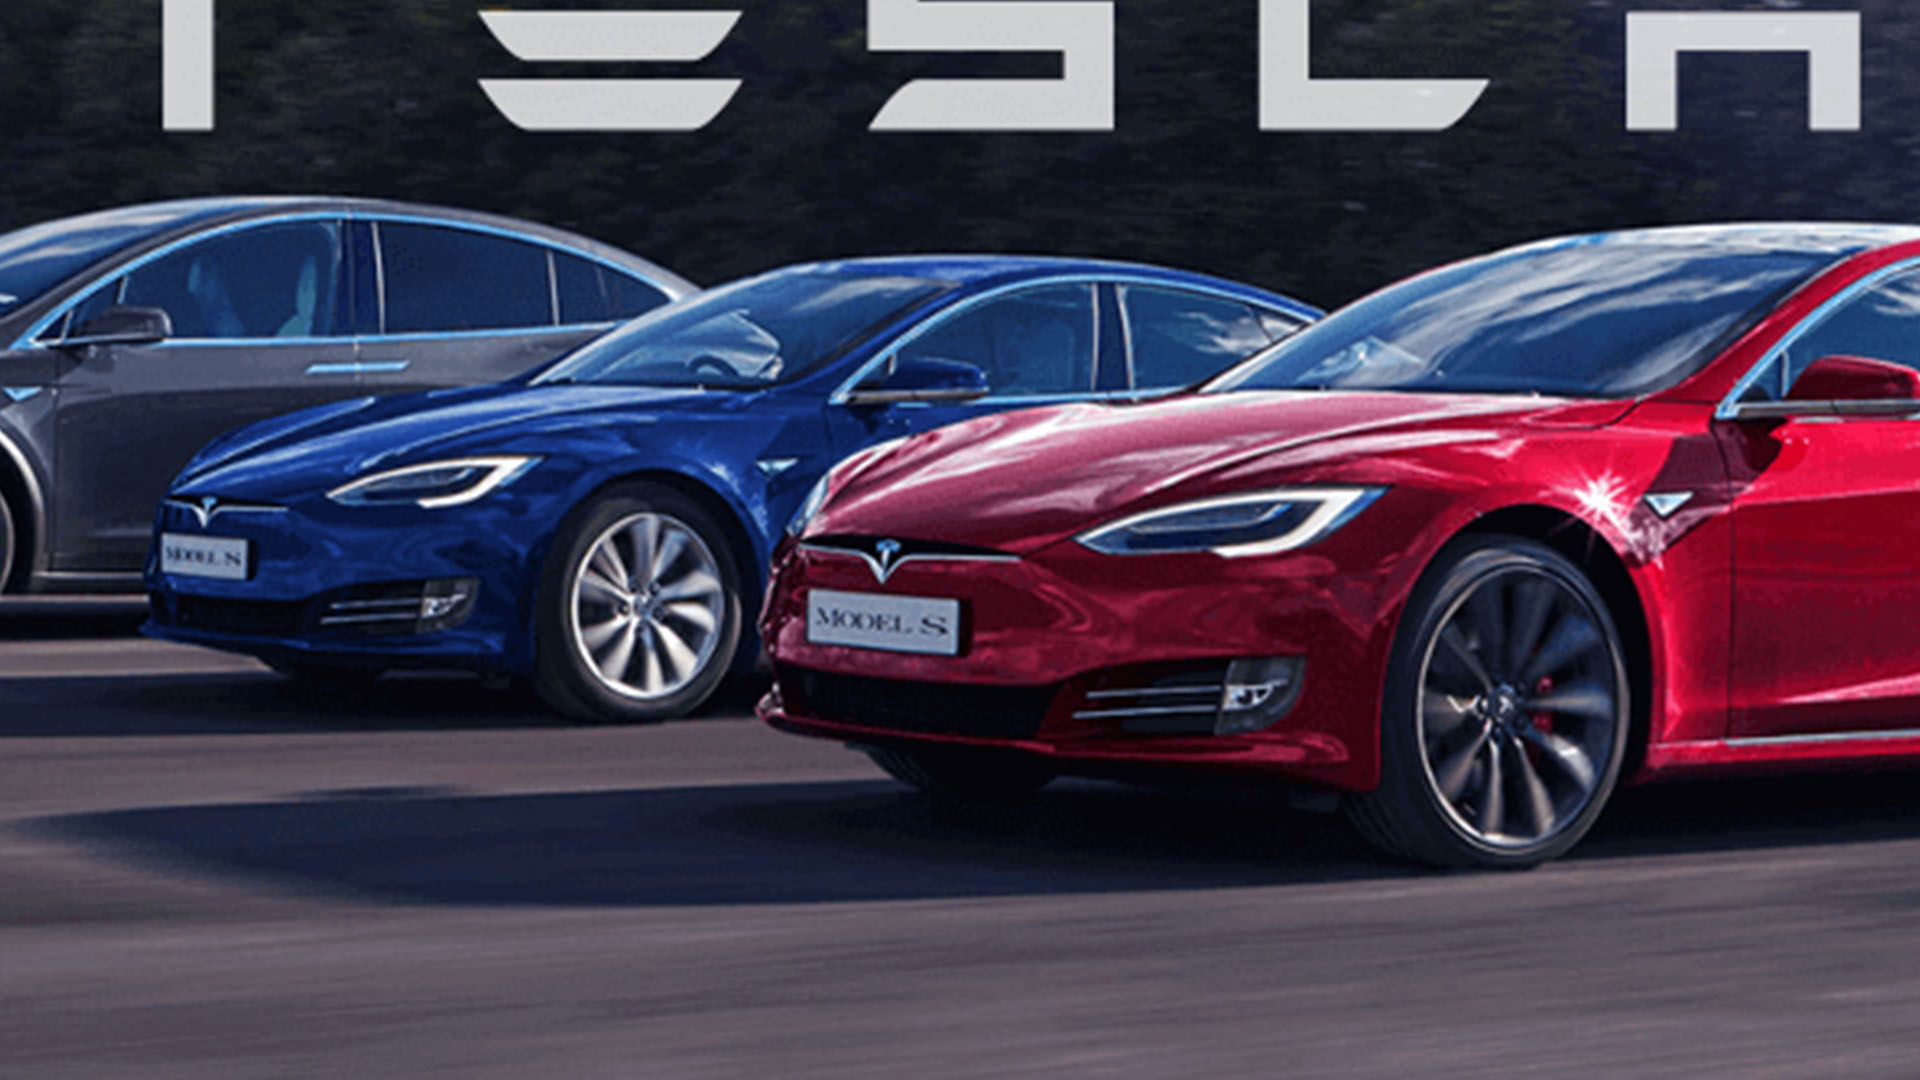 U.S. Electric Car Maker Tesla ‘very close’ to Driver less Cars